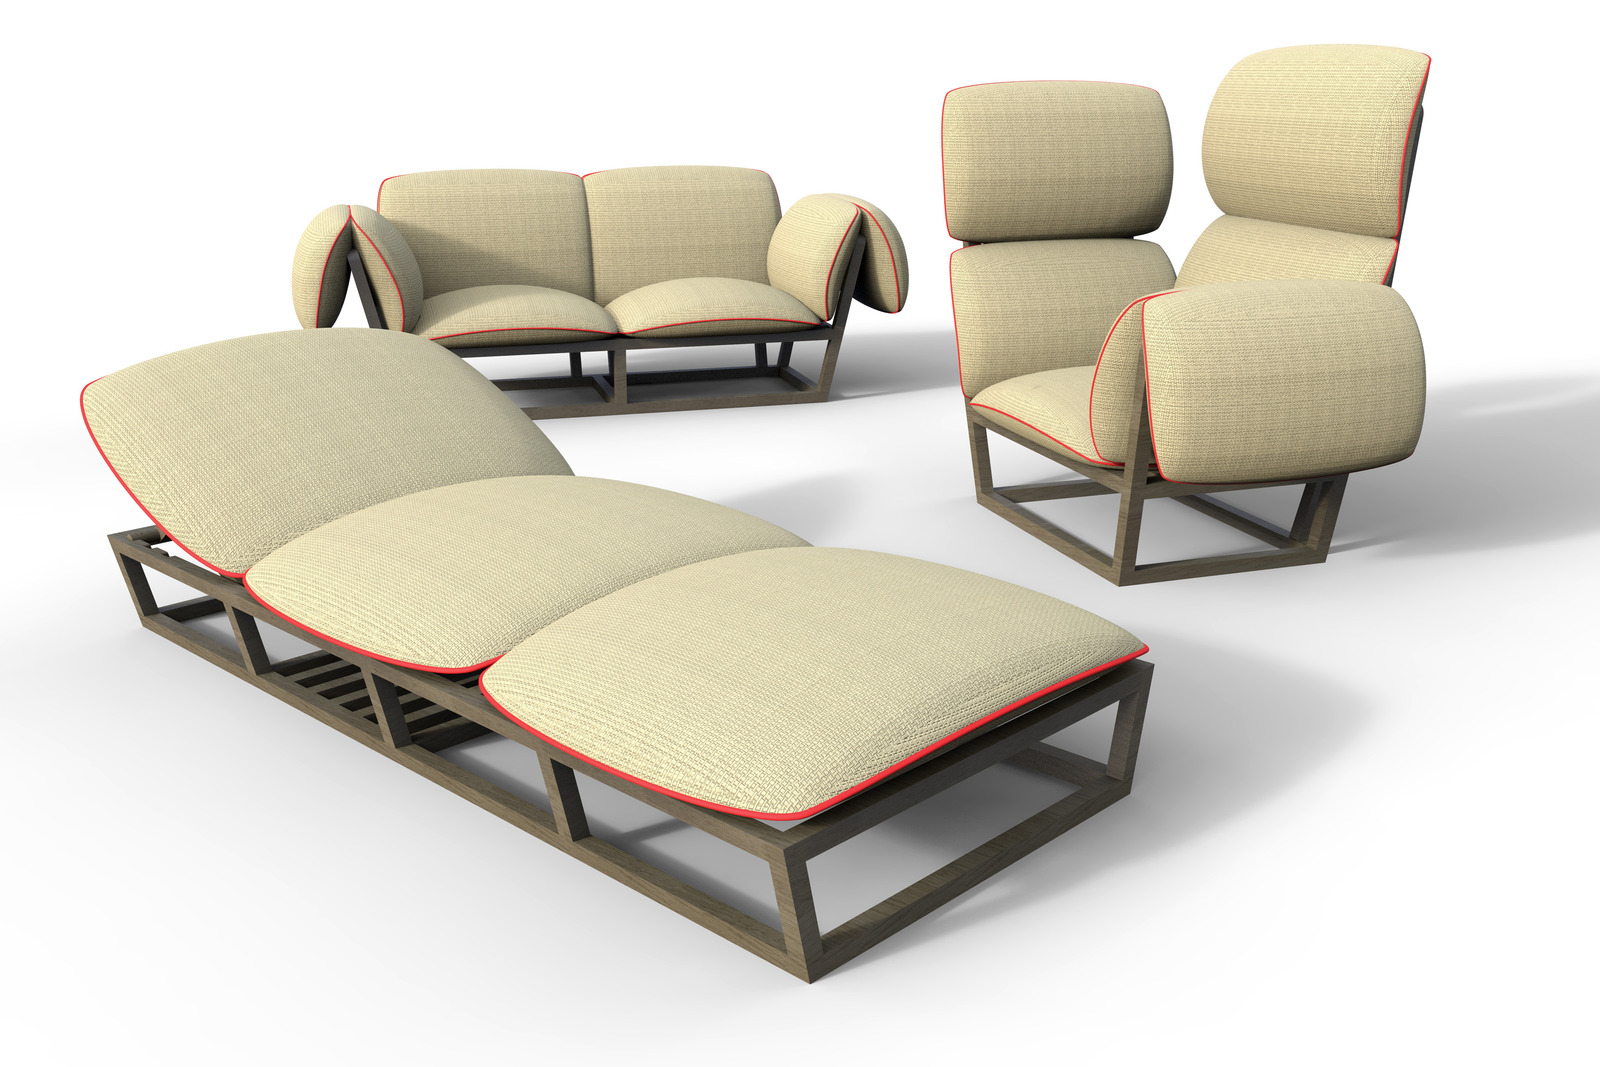 unusual-garden-armchair-has-futuristic-design-3.jpg